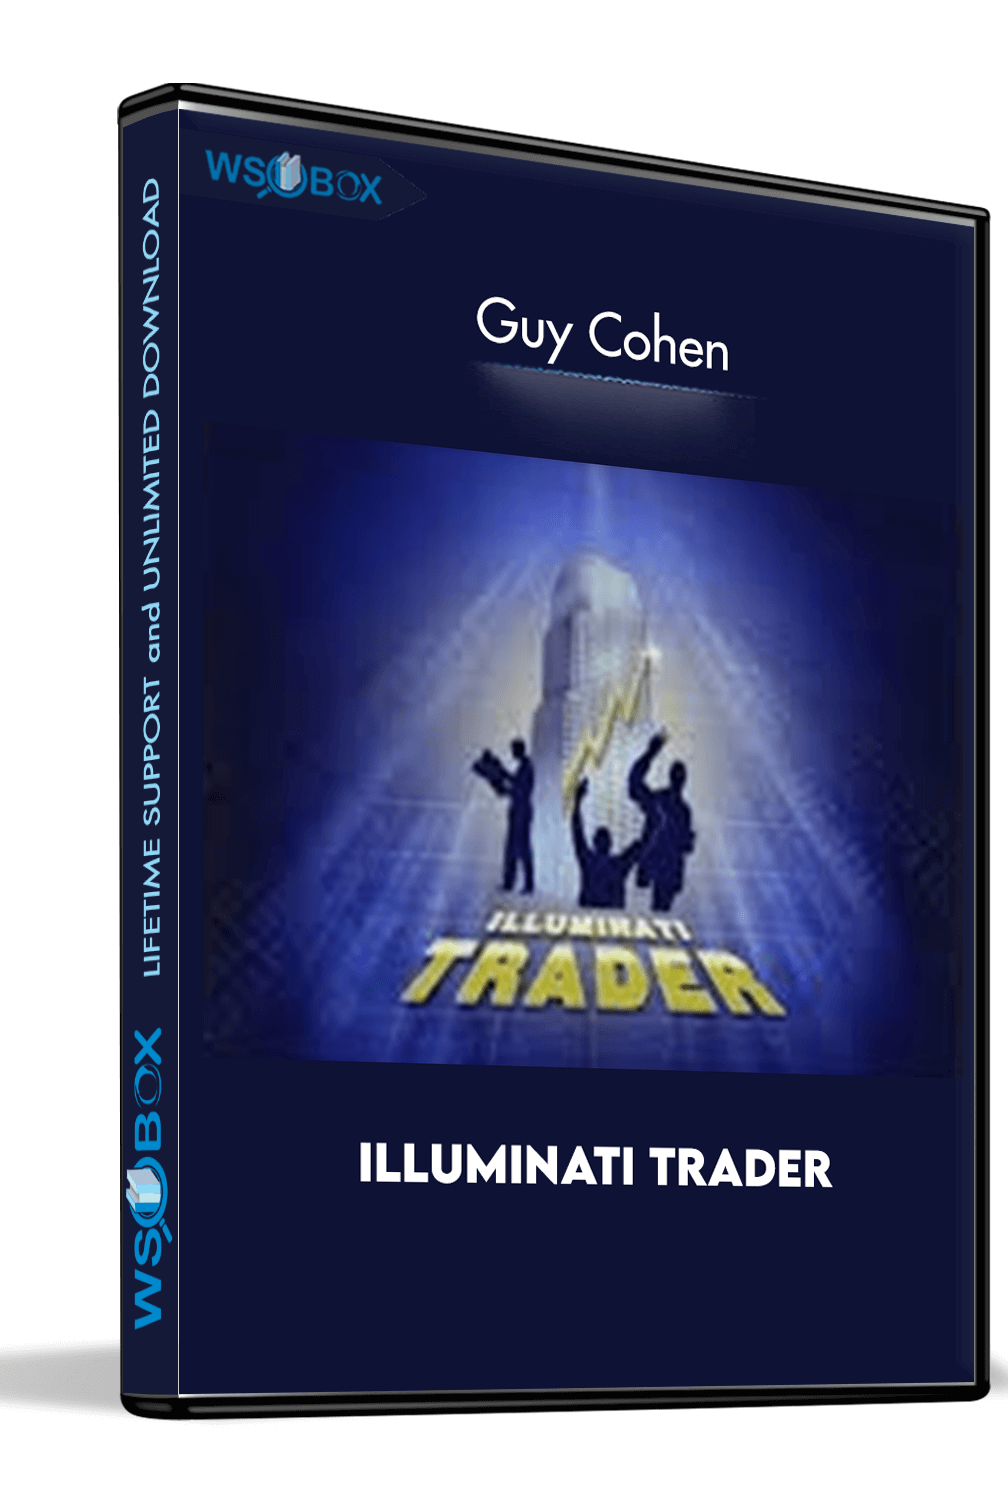 illuminati-trader-guy-cohen